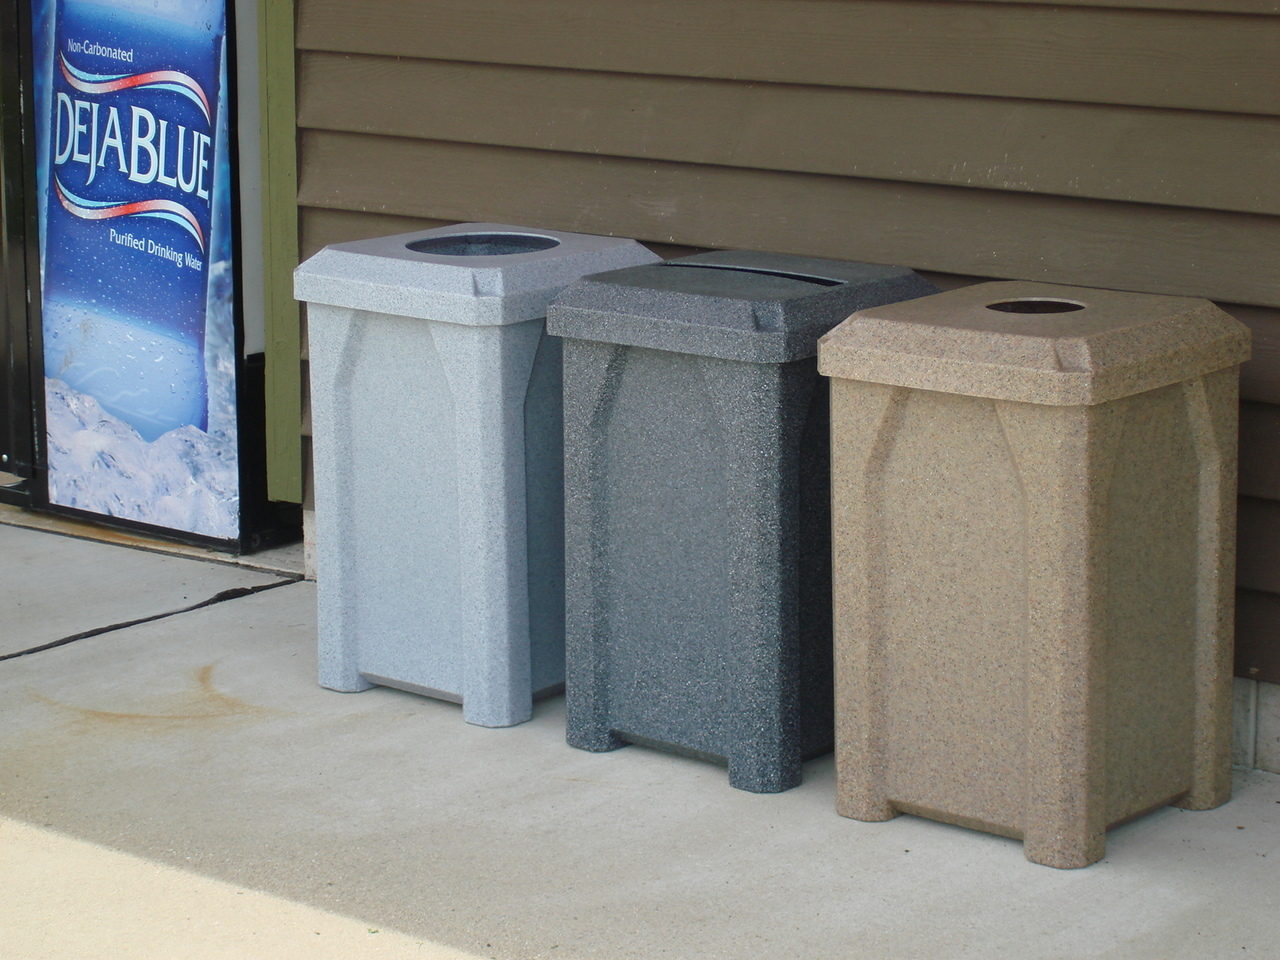 32 Gallon Kolor Can Indoor Outdoor Trash Can